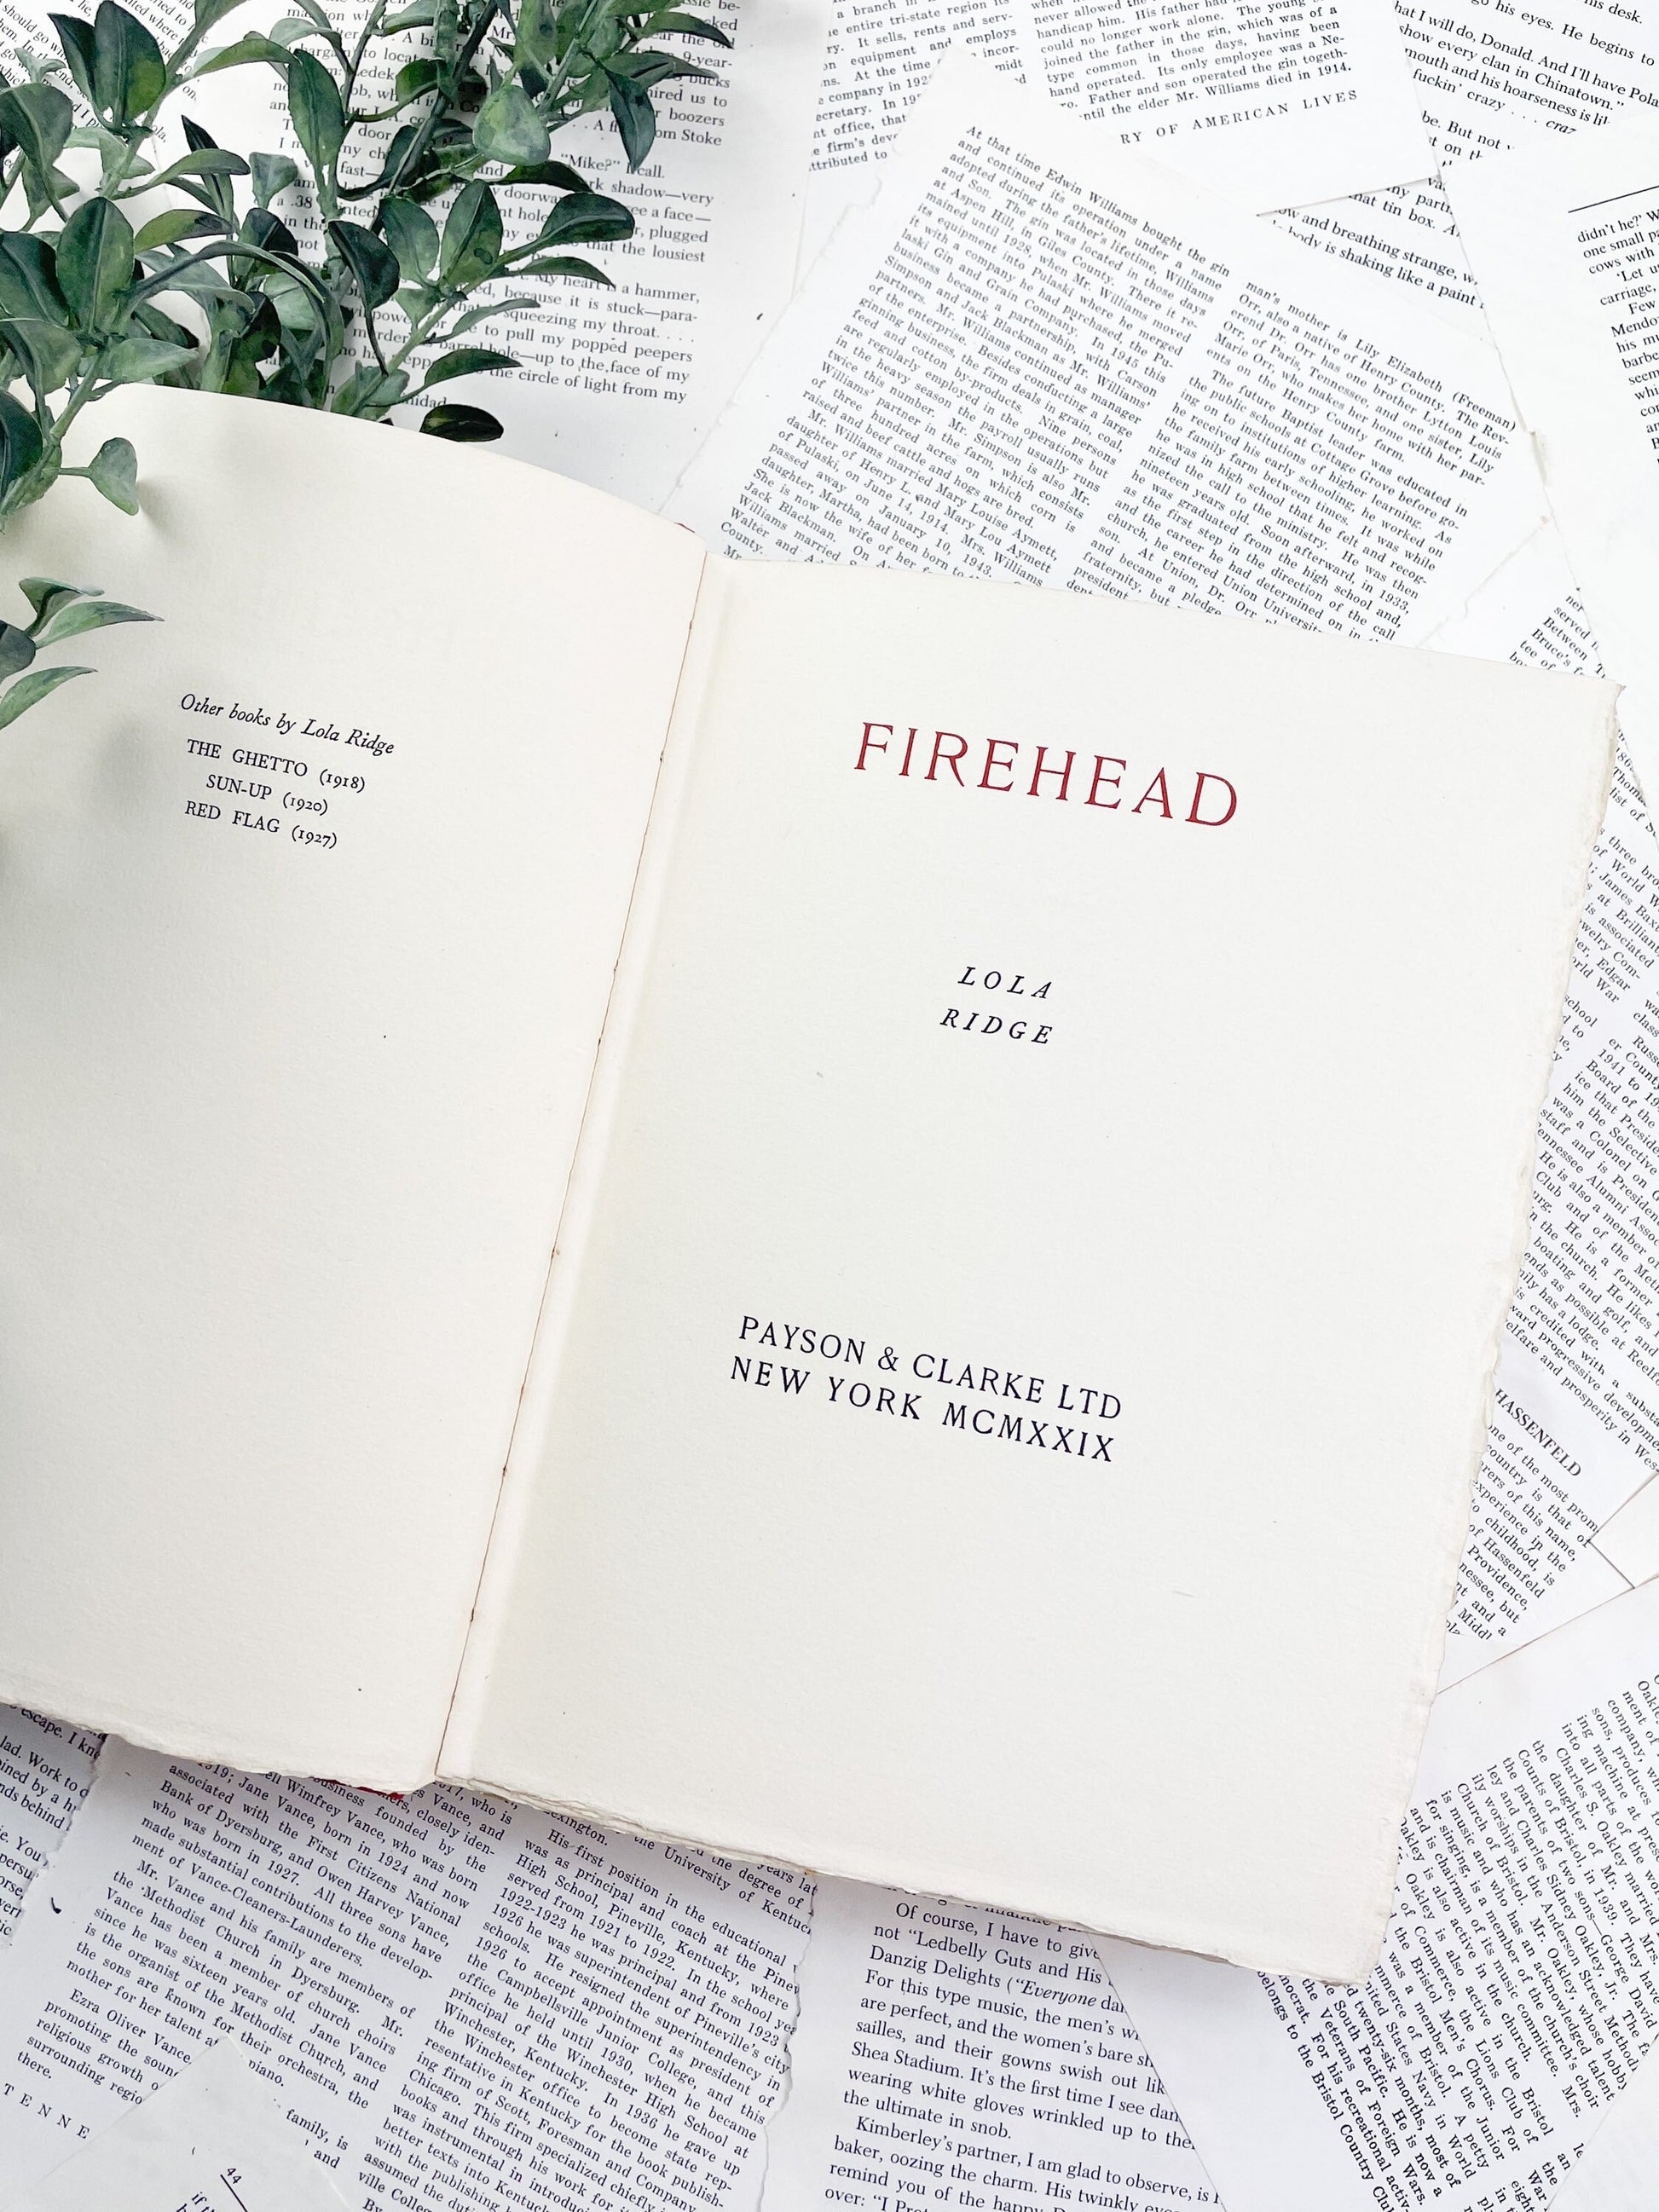 Rare Books, Firehead by Lola Ridge, Antique Poetry